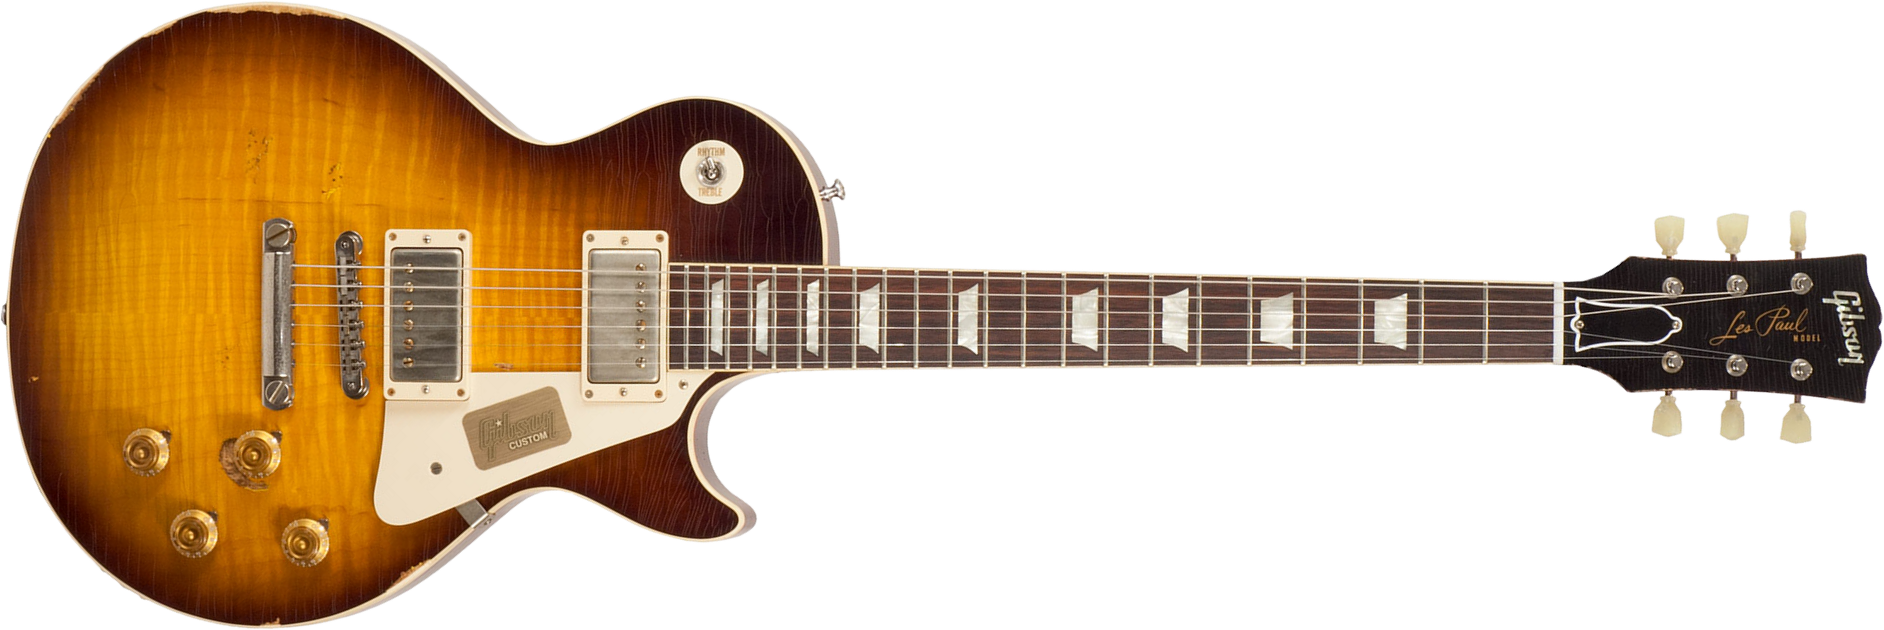 Gibson Custom Shop M2m Les Paul Standard 1958 2h Ht Rw #r862323 - Aged Kindred Burst Fade - Guitarra eléctrica de corte único. - Main picture